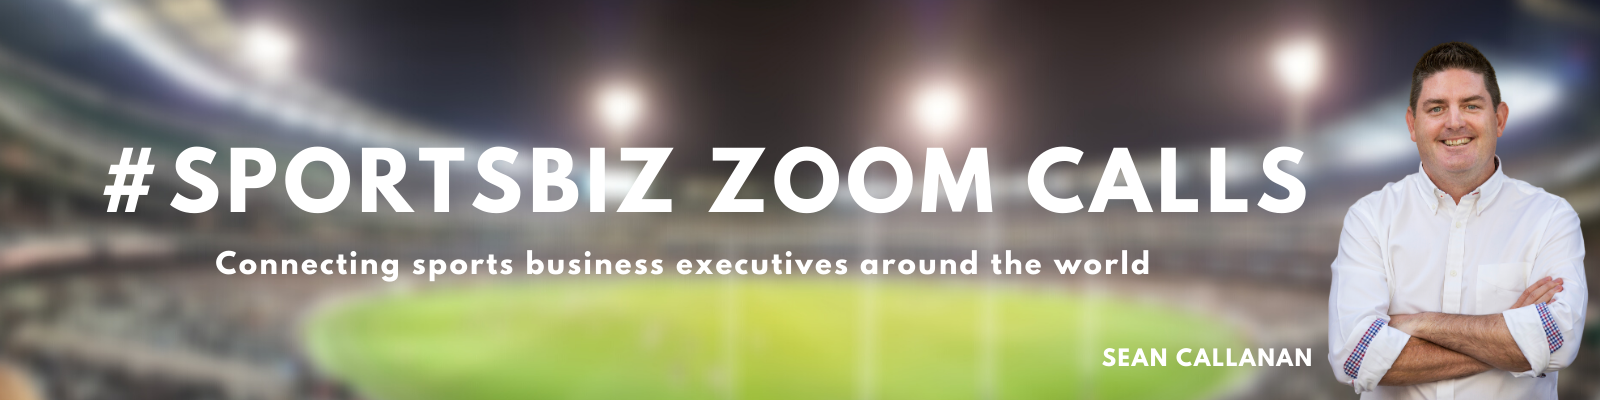 Join Sean for #SportsBiz Zoom Calls